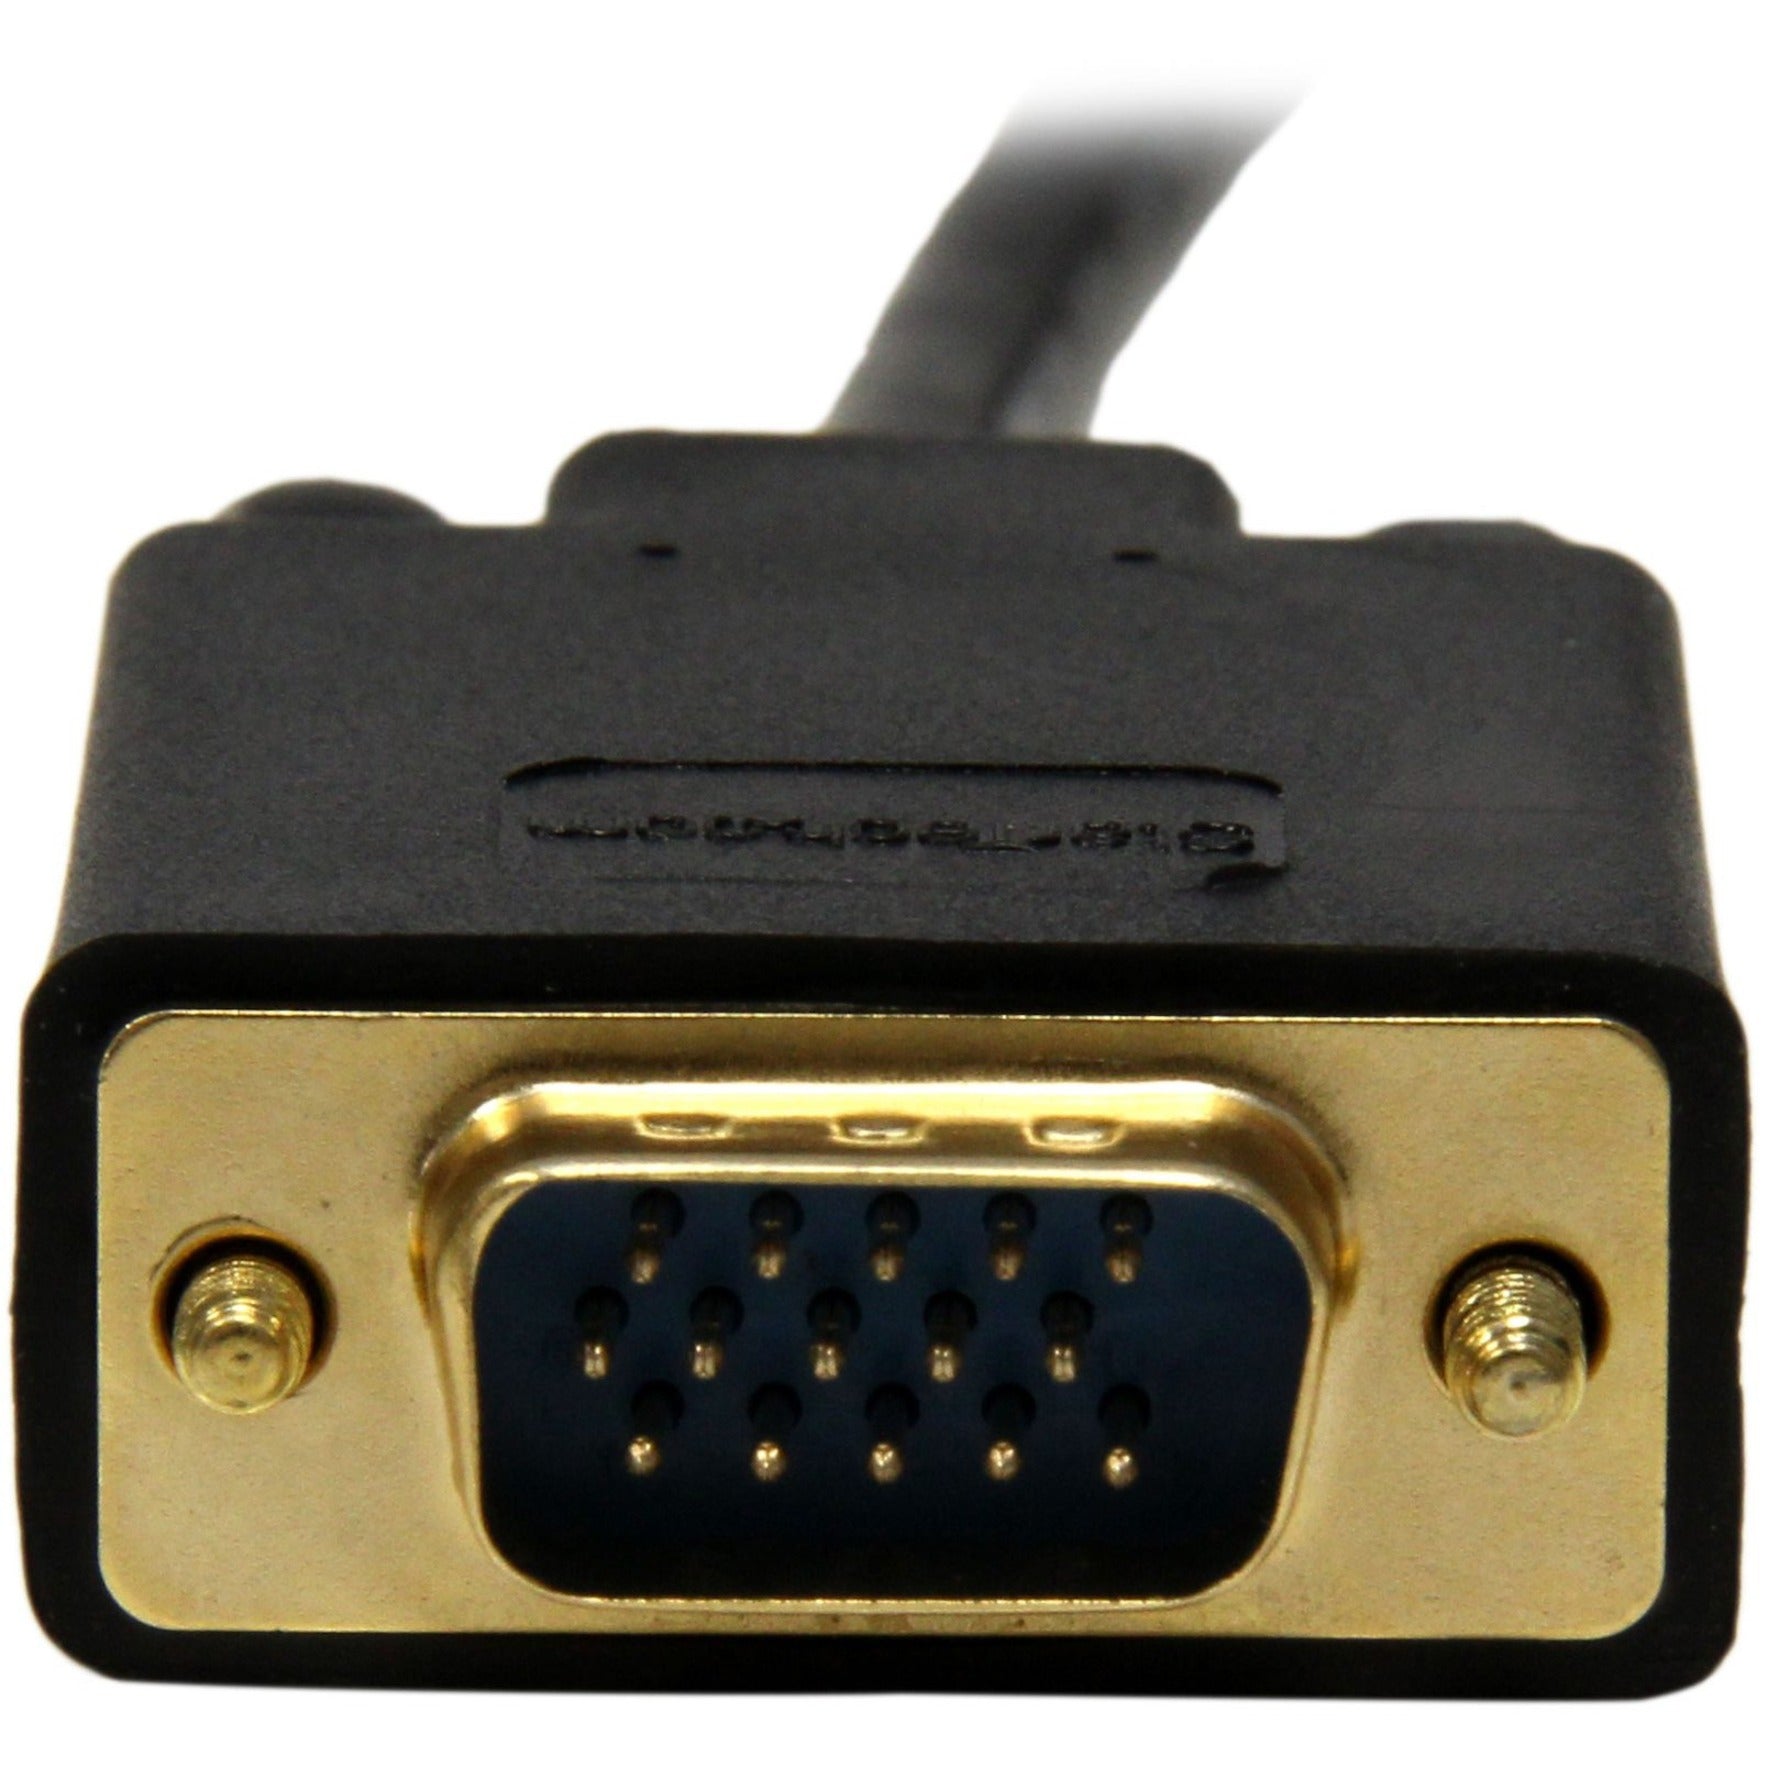 StarTech.com MDP2VGAMM15B Mini DisplayPort to VGA Adapter Converter Cable - Black, 15 ft, 1920x1200